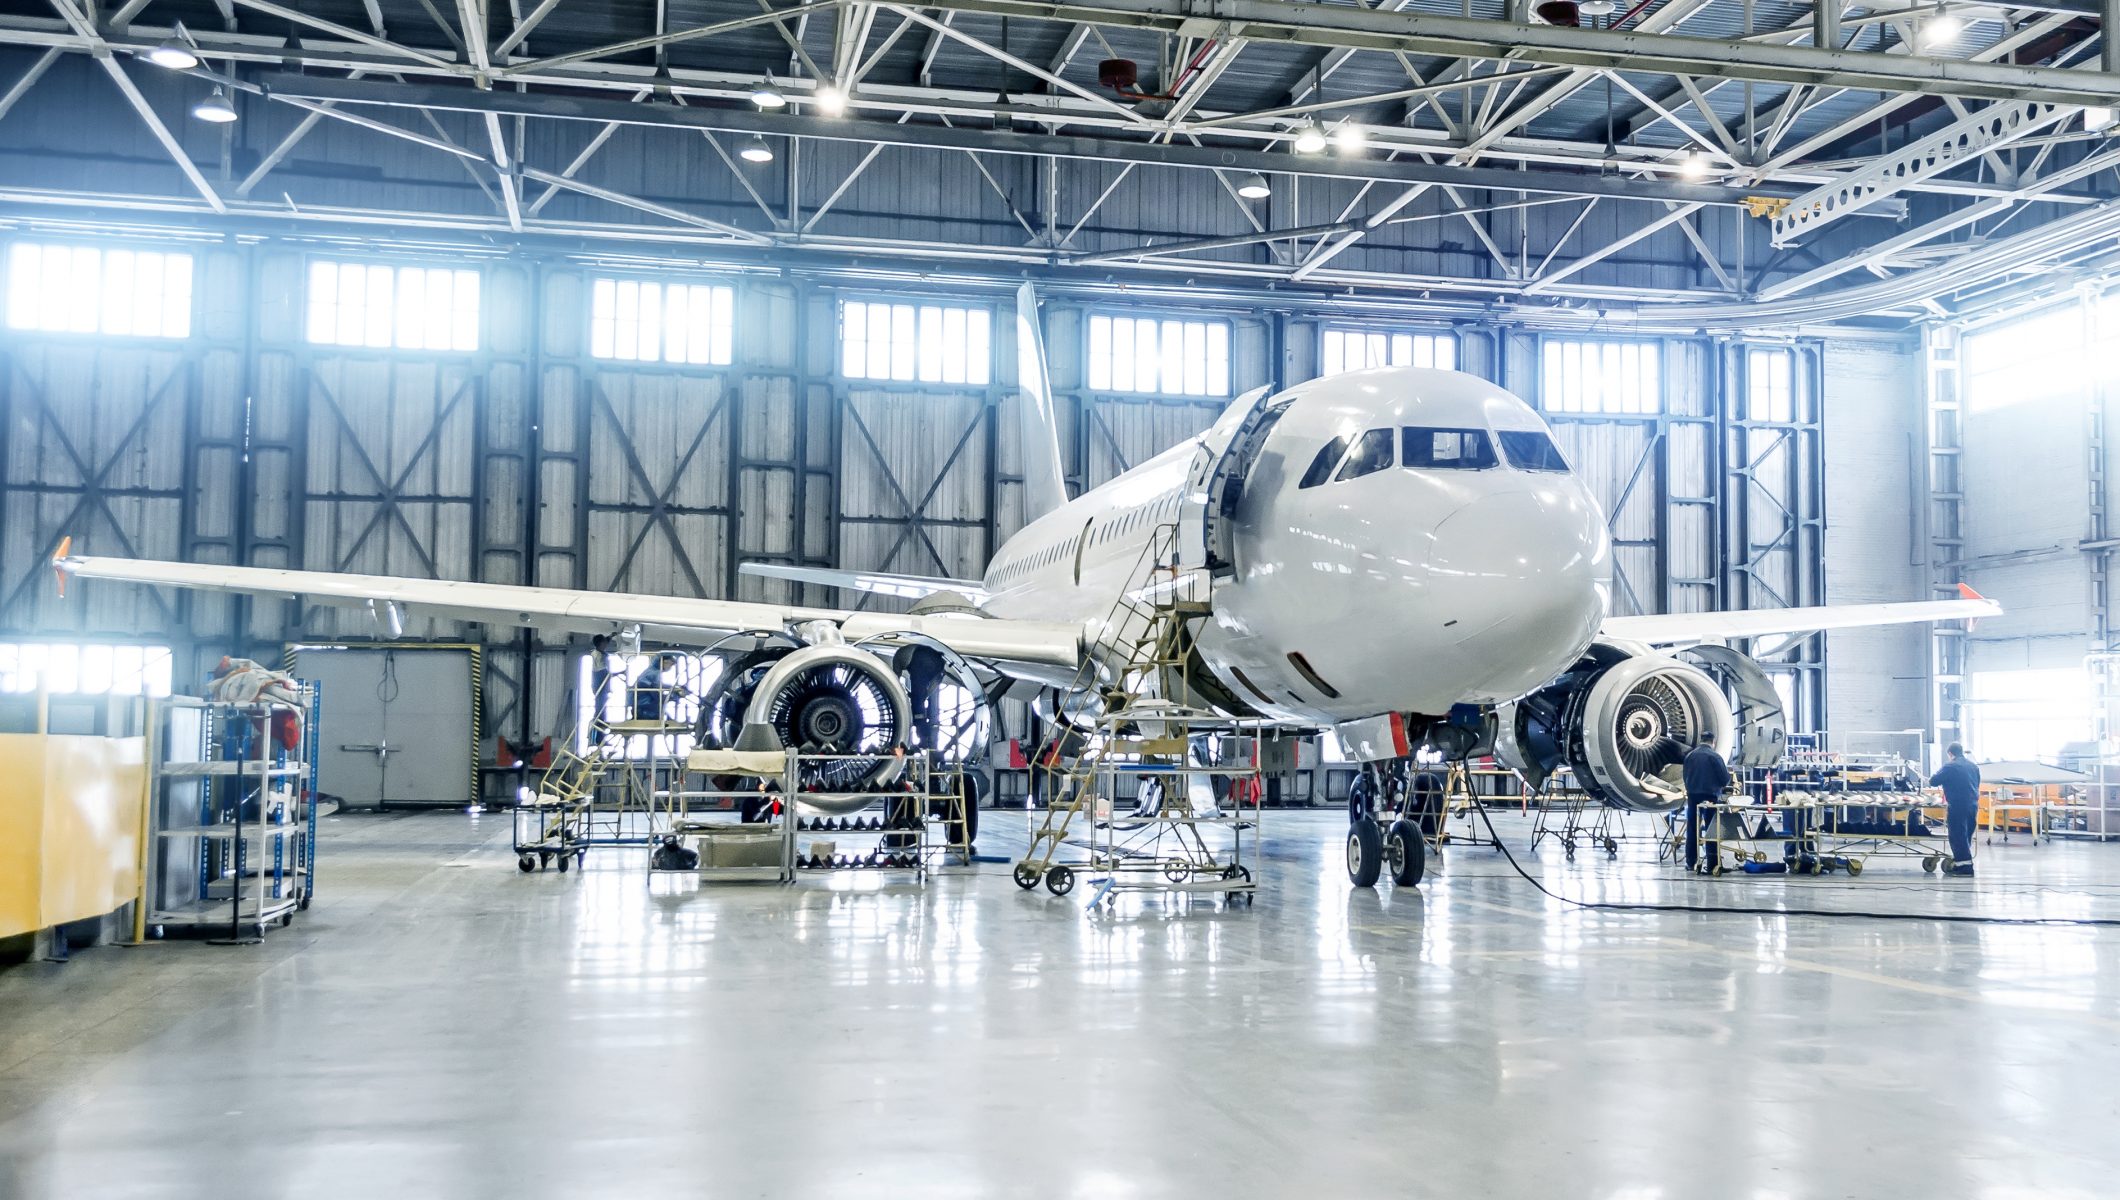 Passenger airplane on maintenance of engine and fuselage check repair in airport hangar